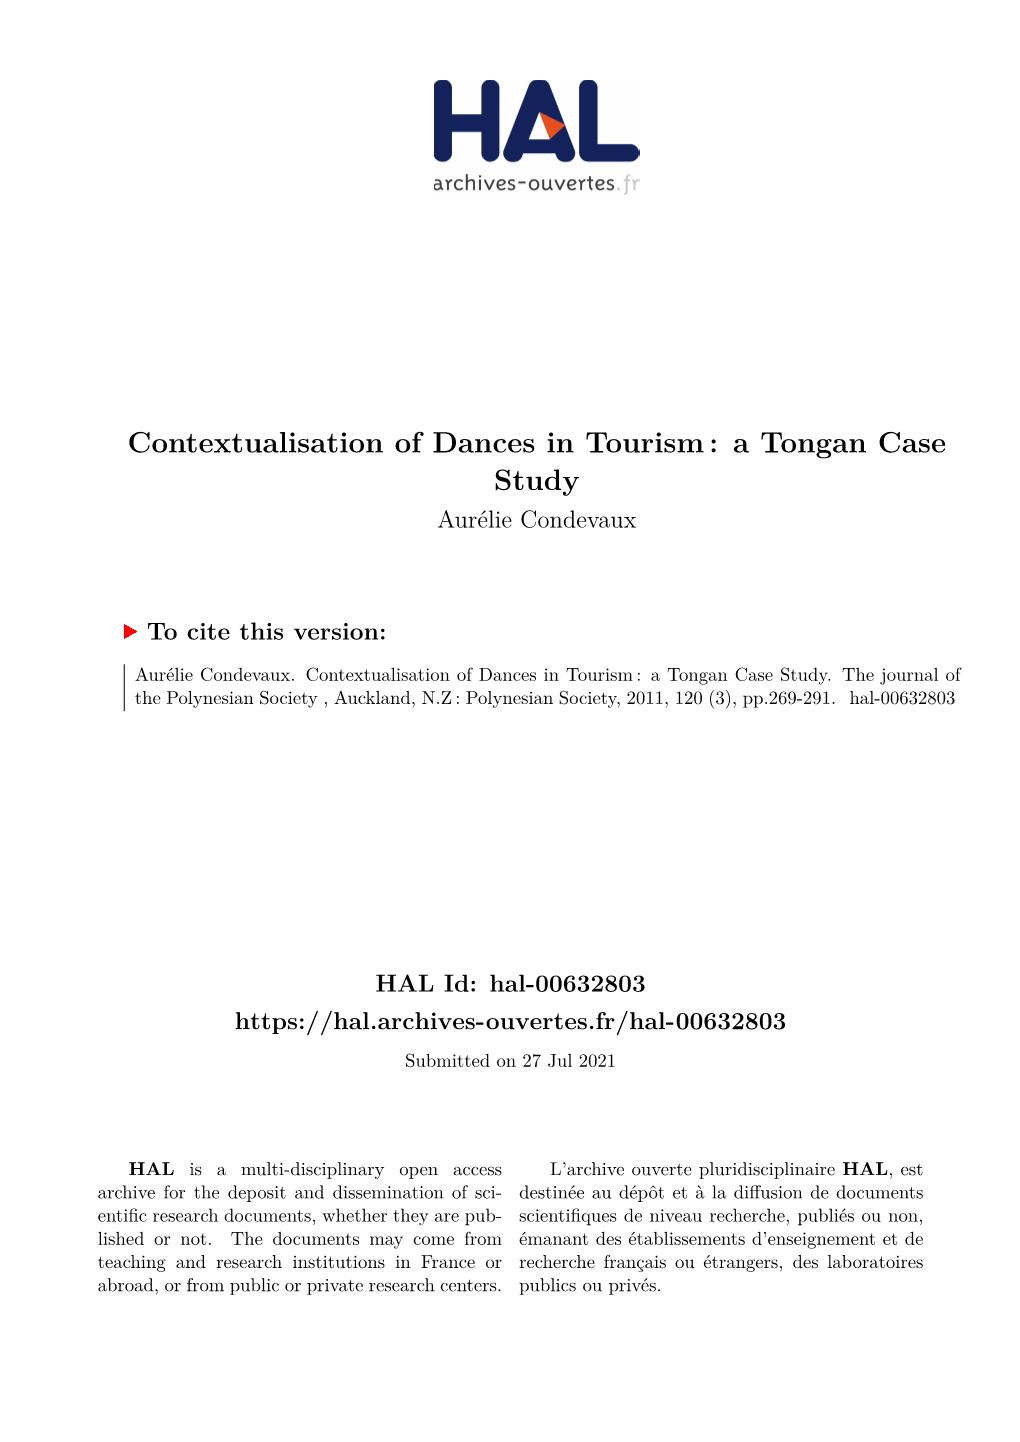 Contextualisation of Dances in Tourism: a Tongan Case Study